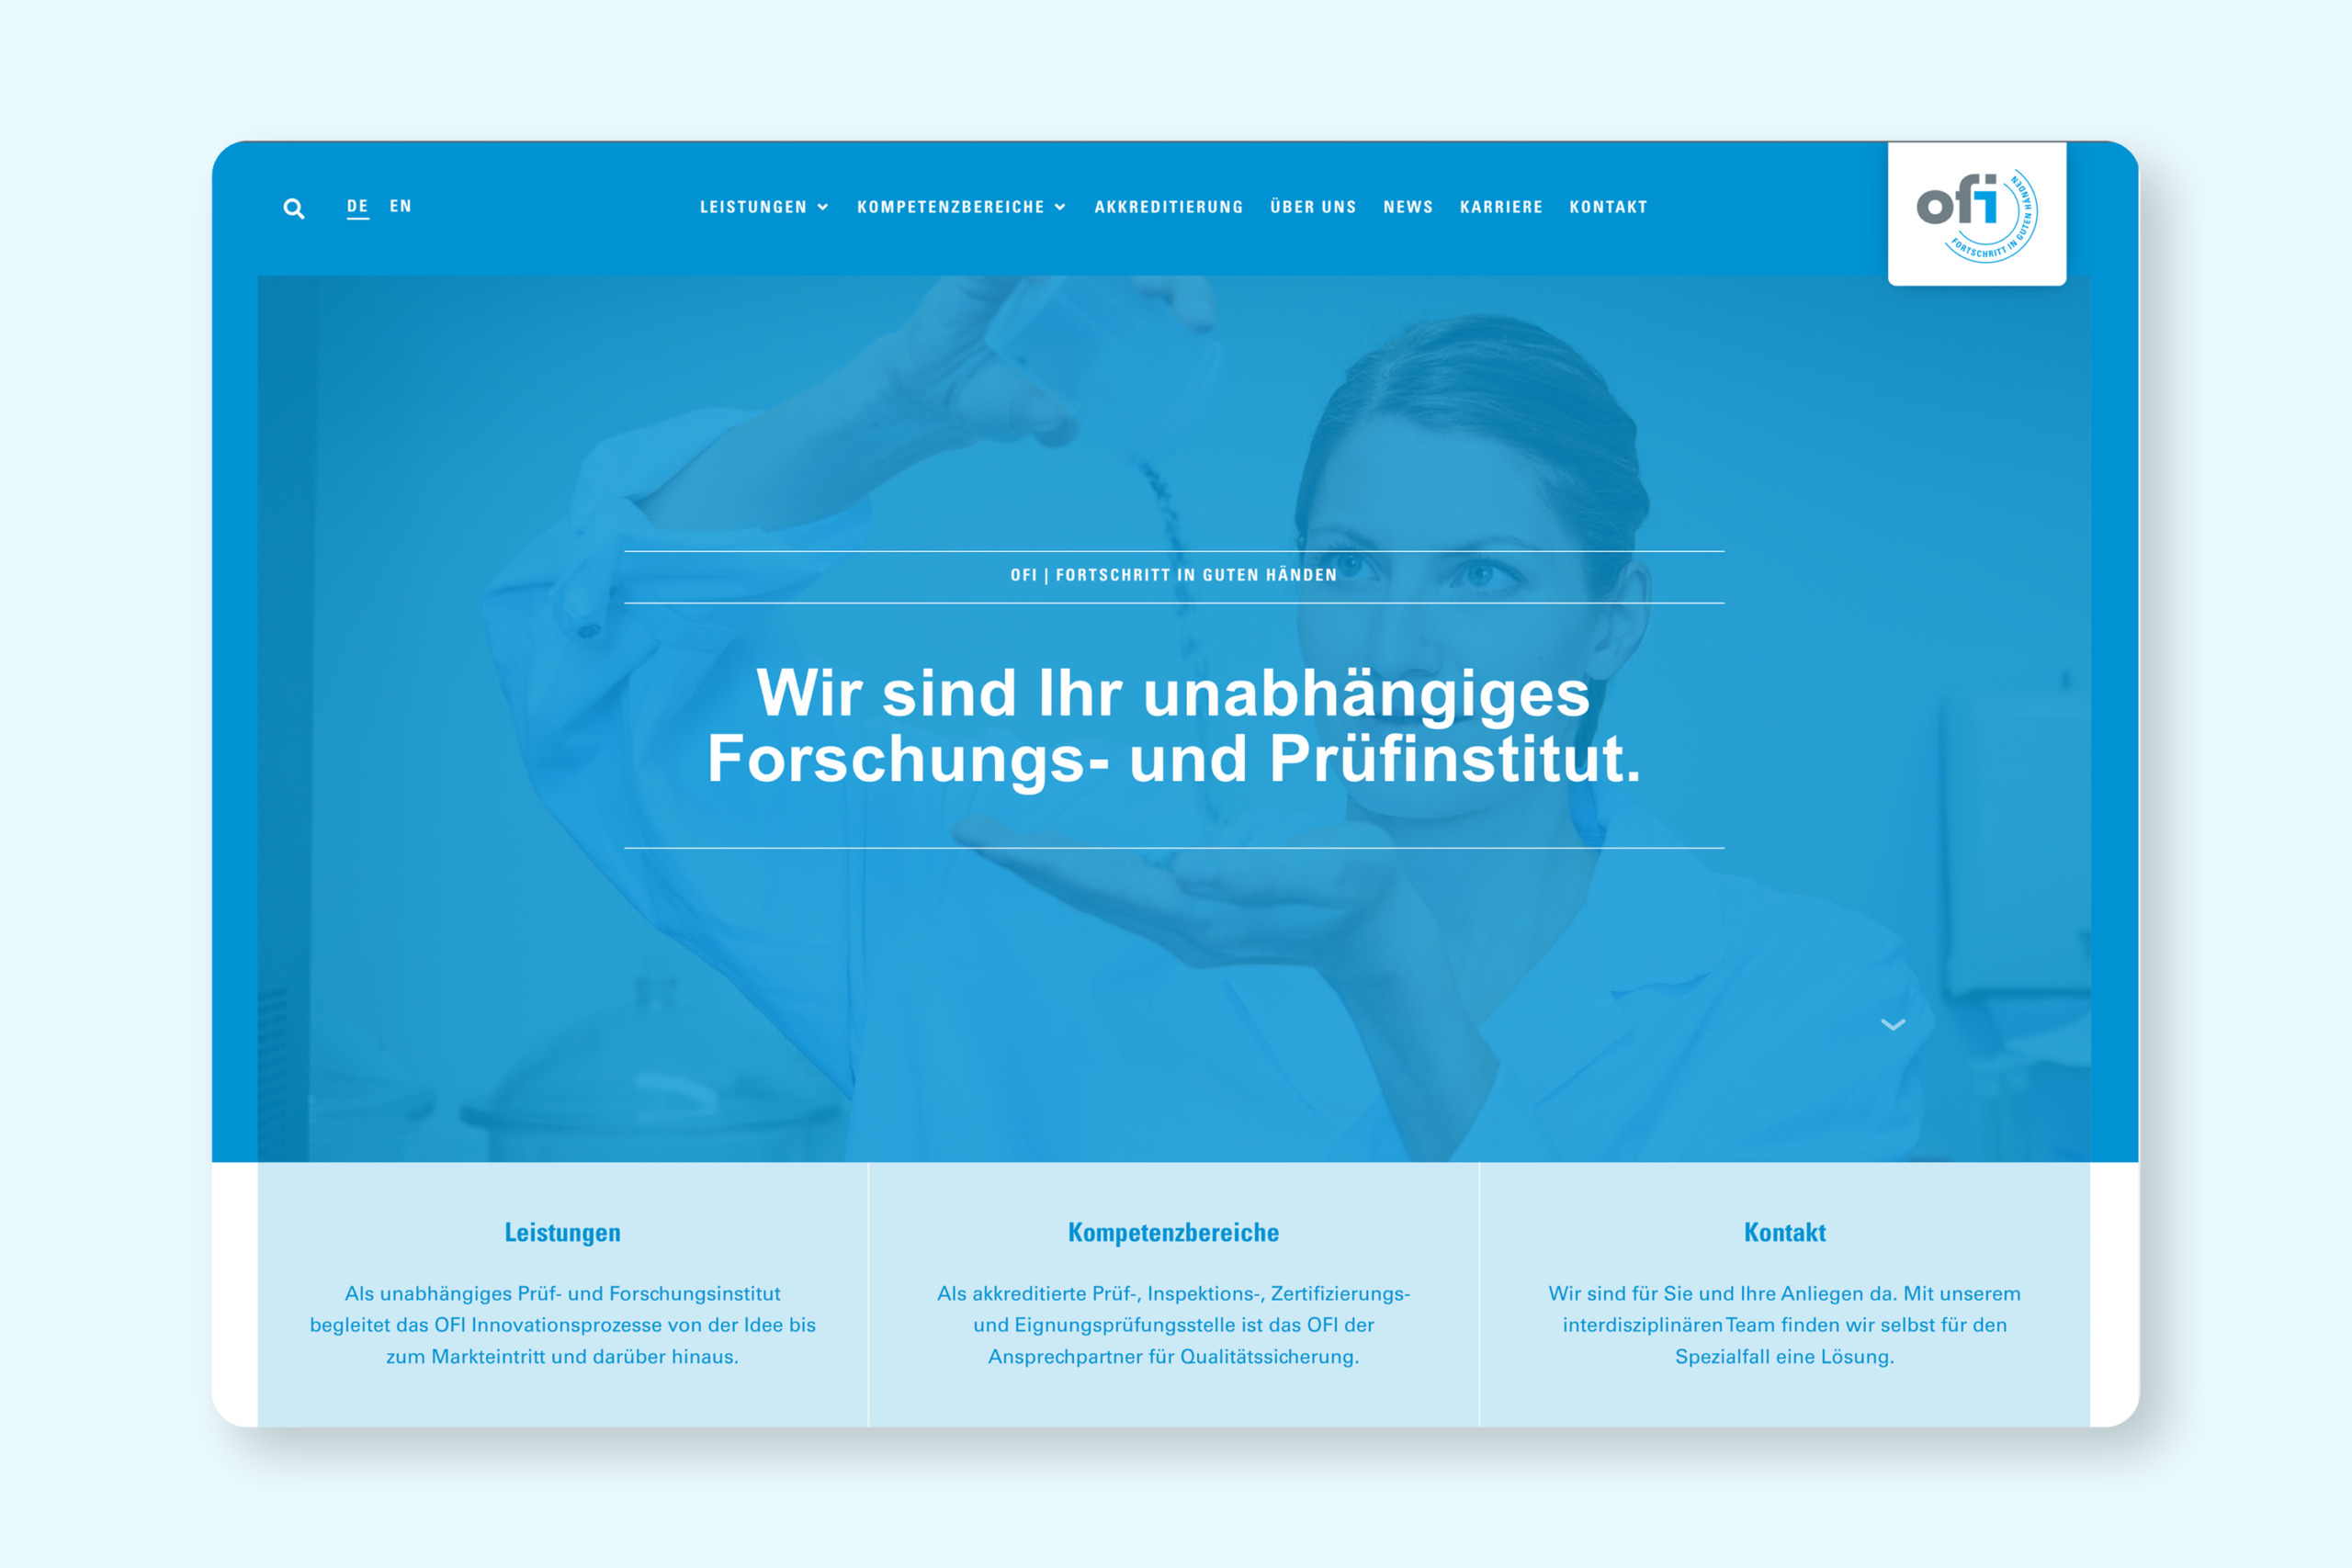 A website OFI for a pharmaceutical company.